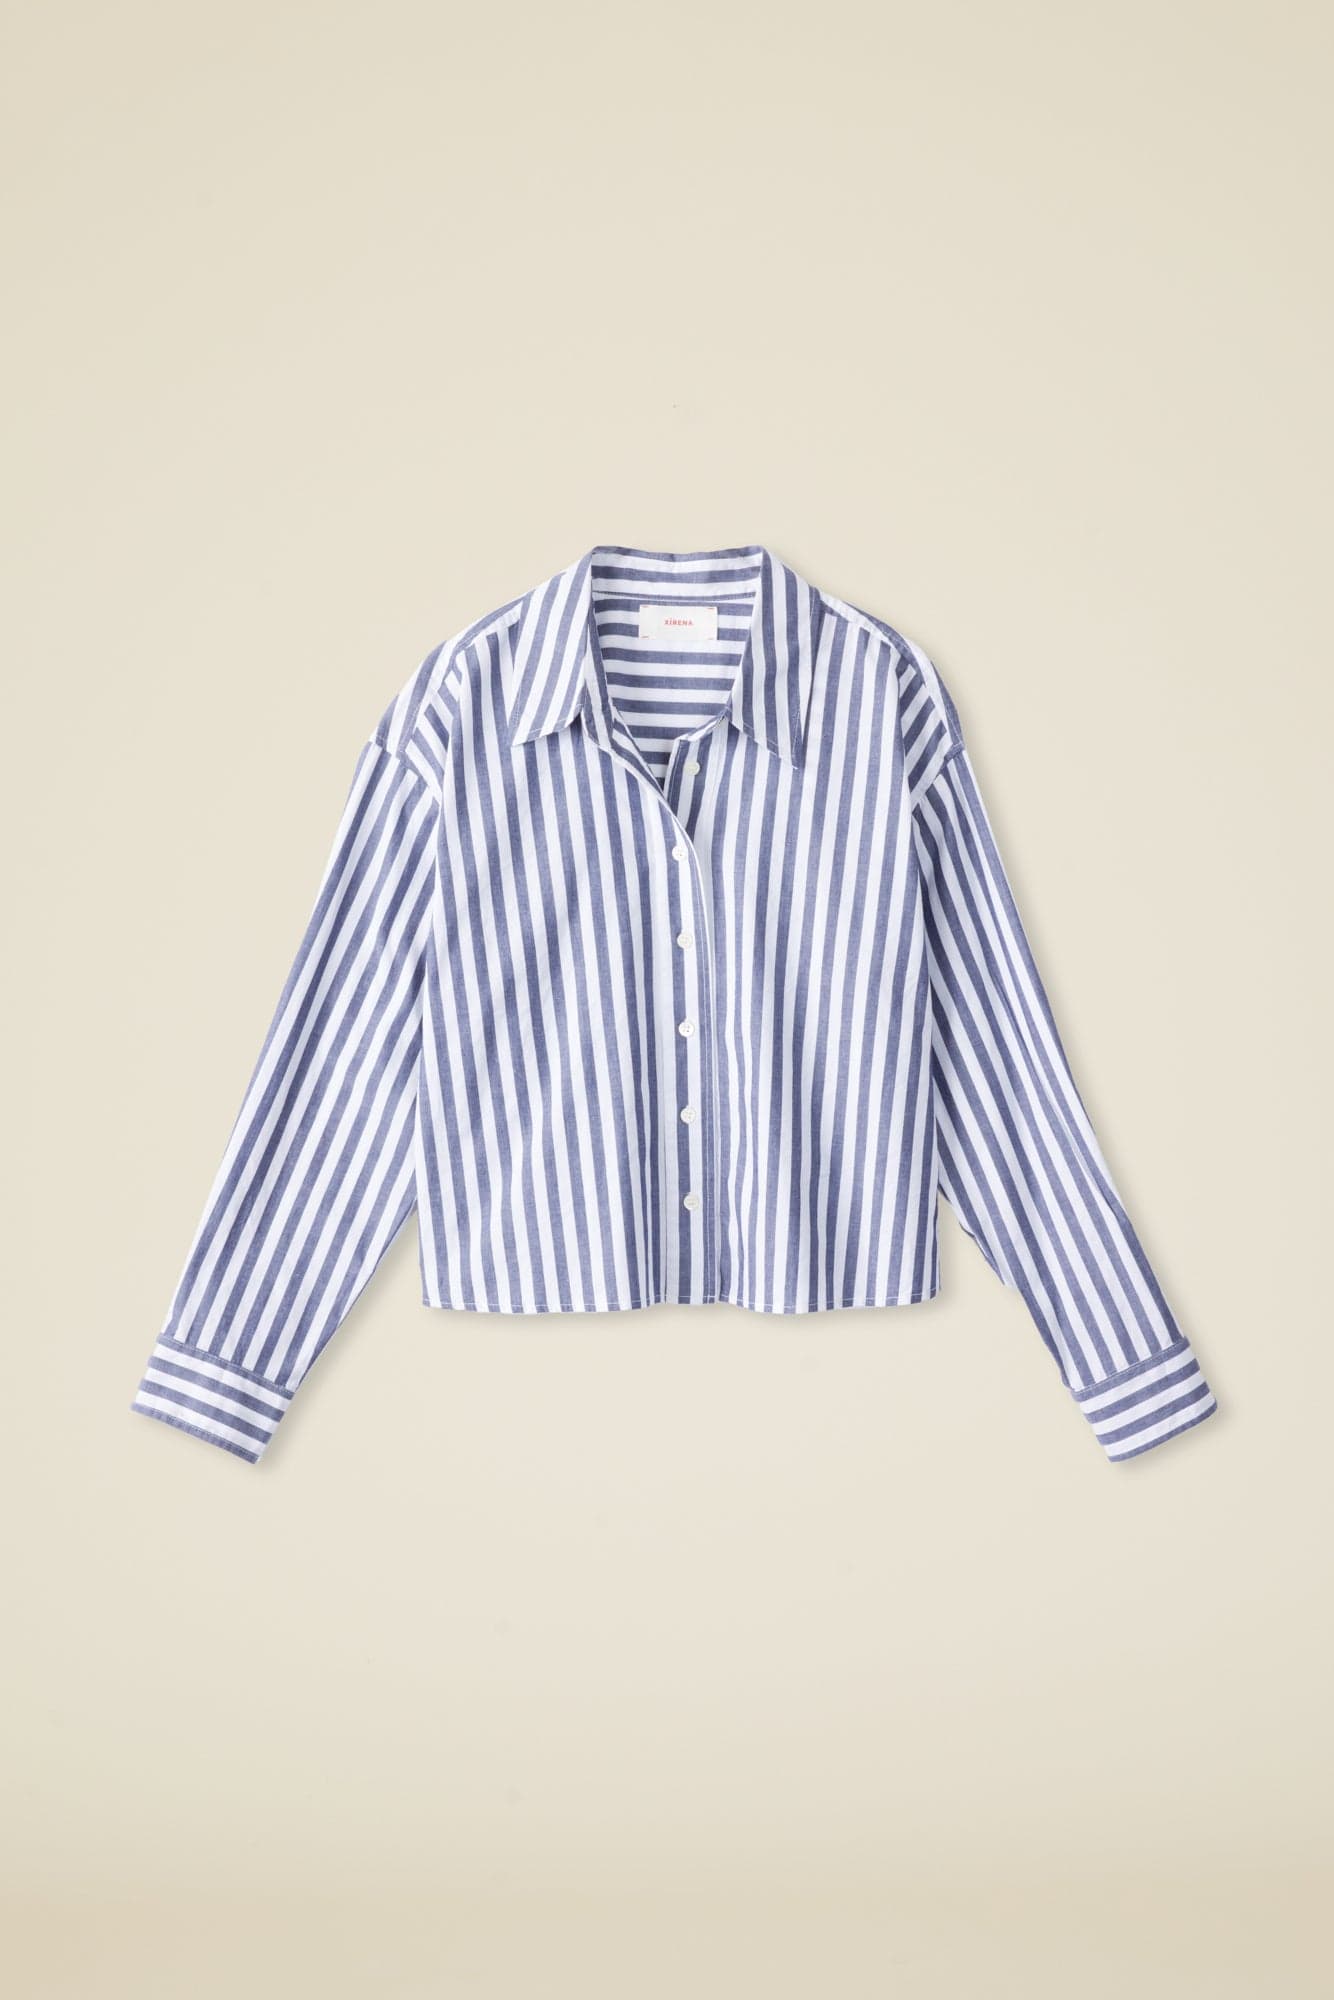 Xirena Shirt Twilight Stripe Morgan Shirt